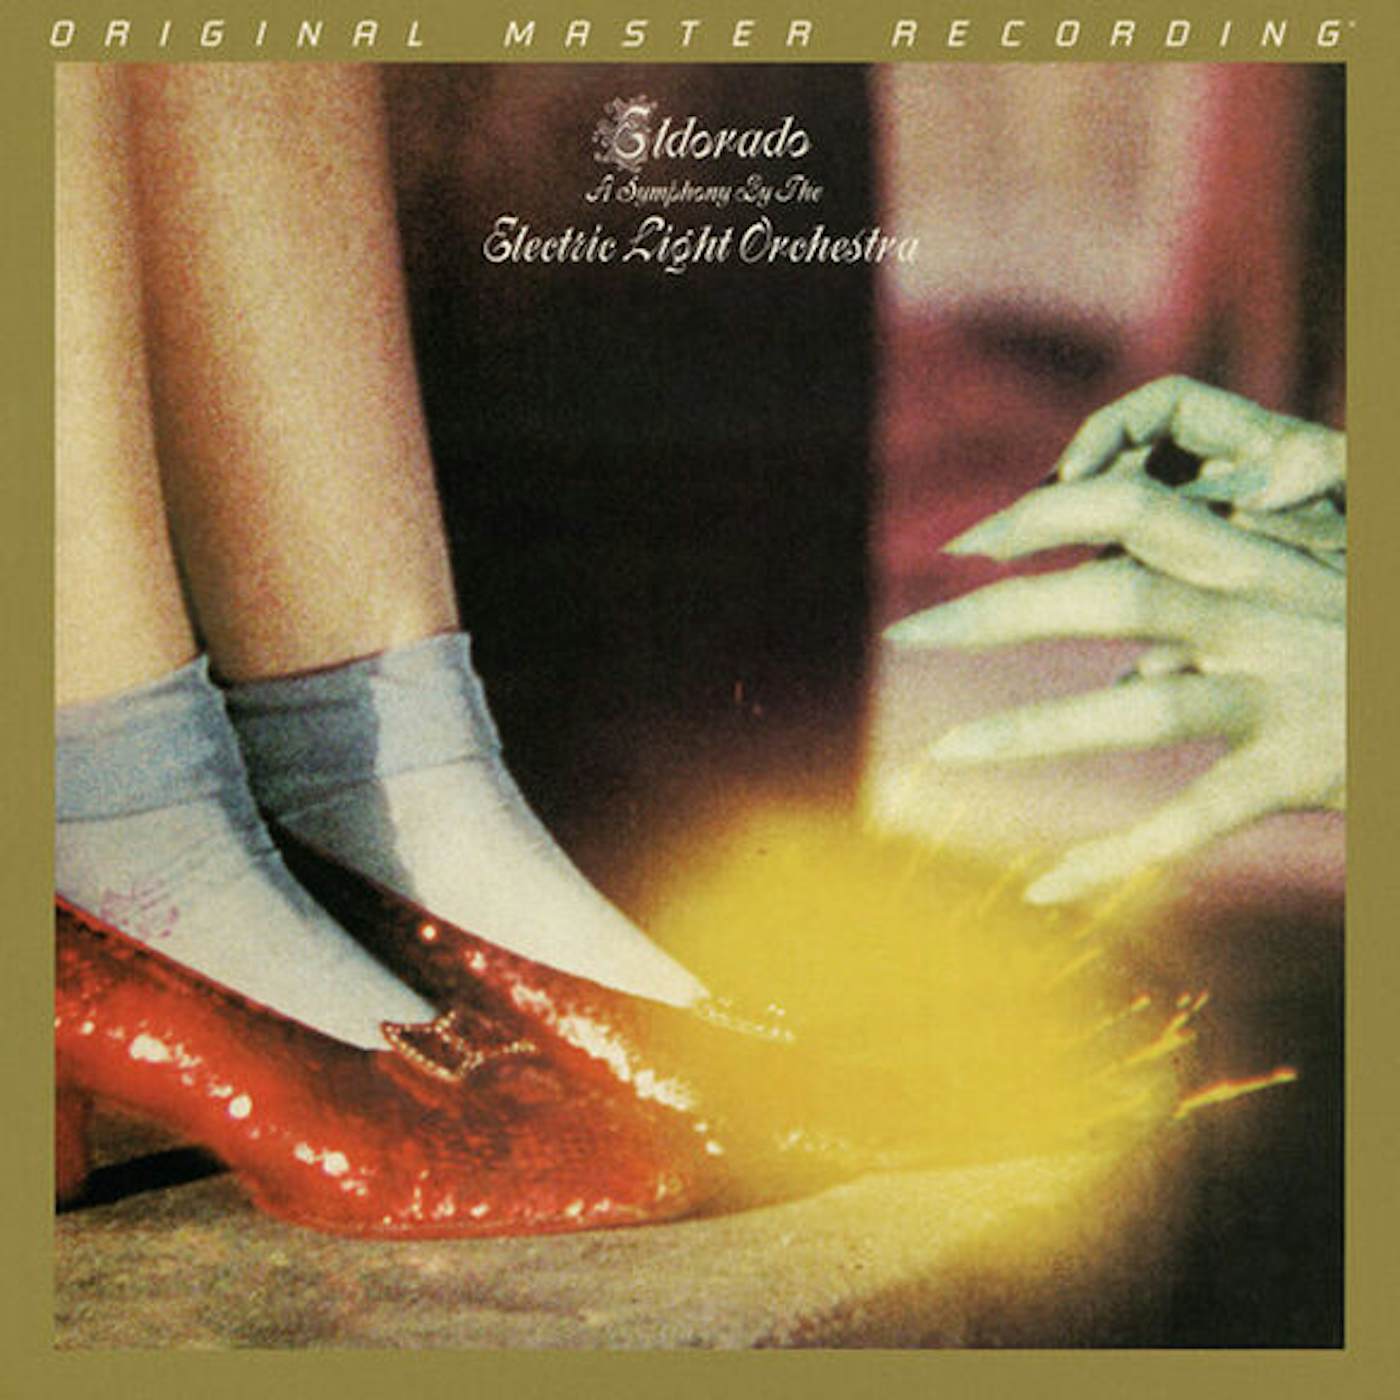 ELO (Electric Light Orchestra) ELDORADO: A SYMPHONY BY THE ELECTRIC LIGHT Vinyl Record